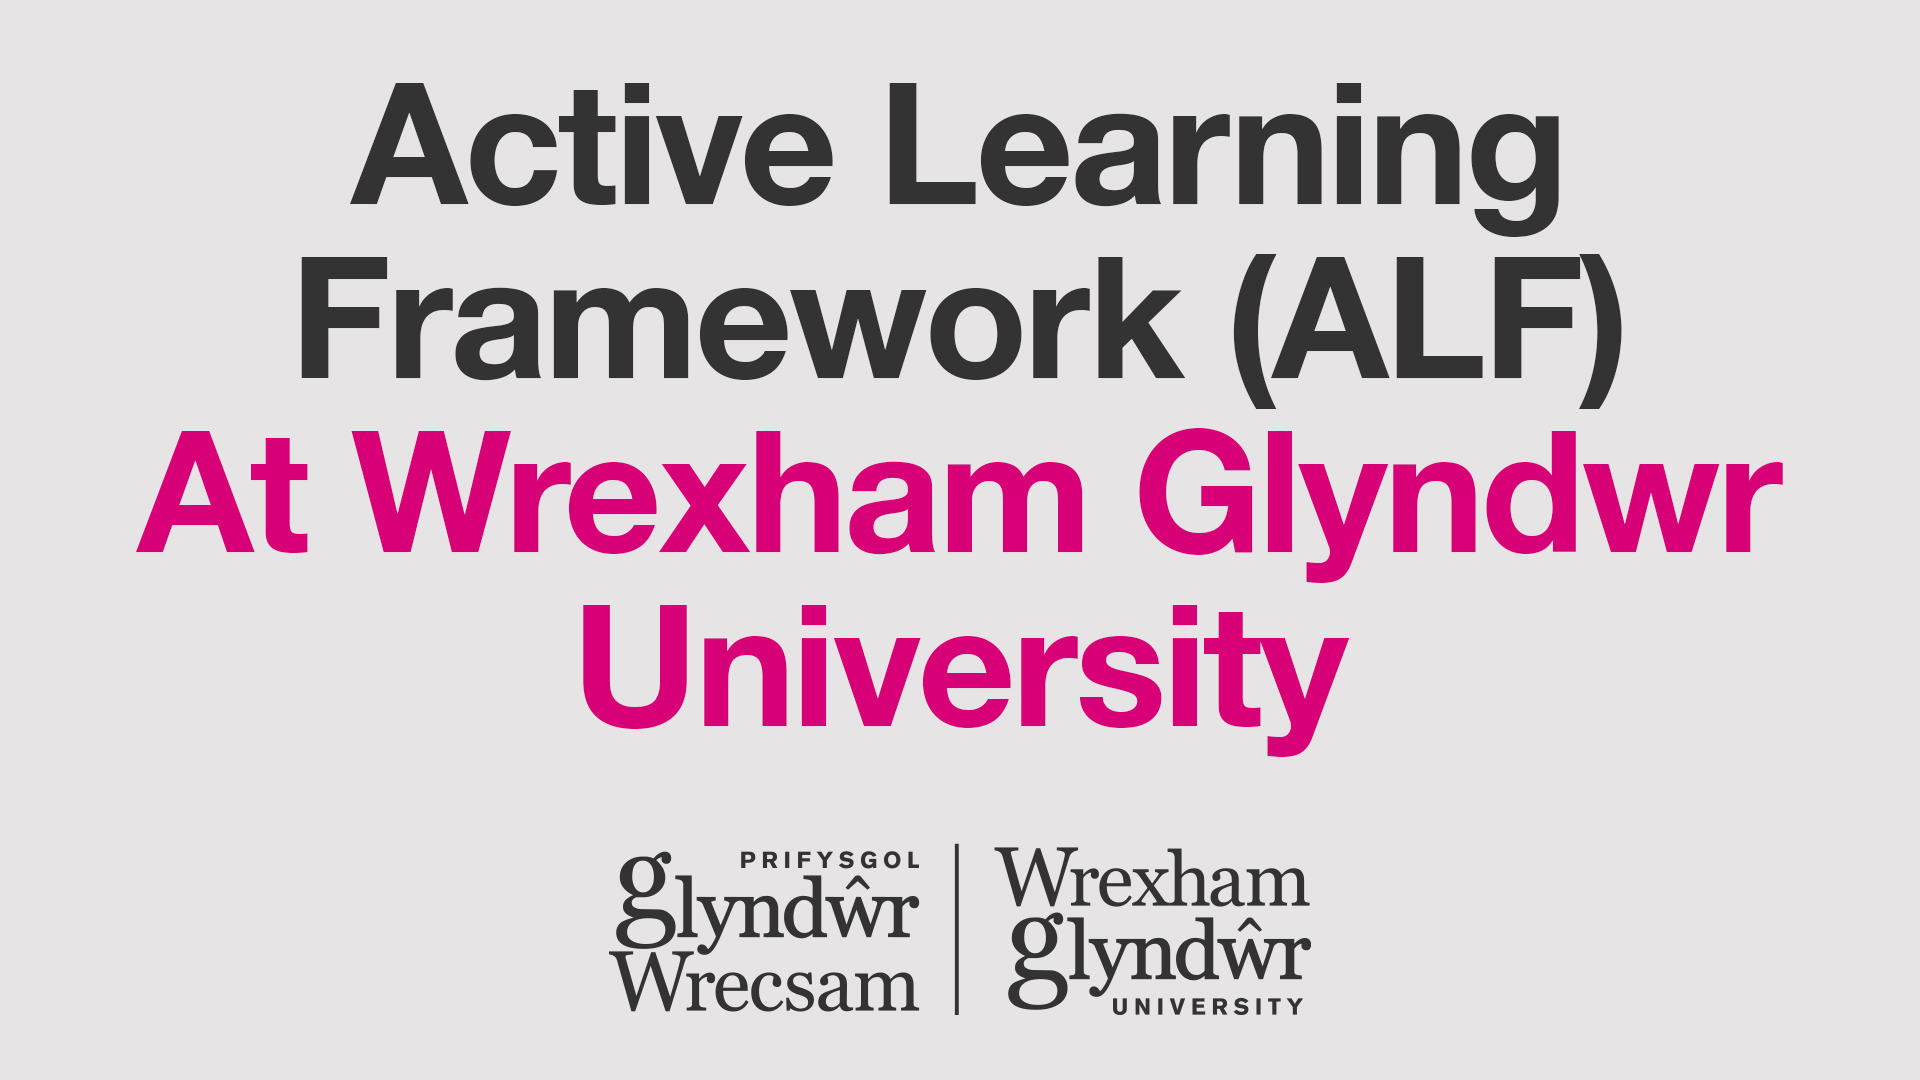 Active Learning Framework video